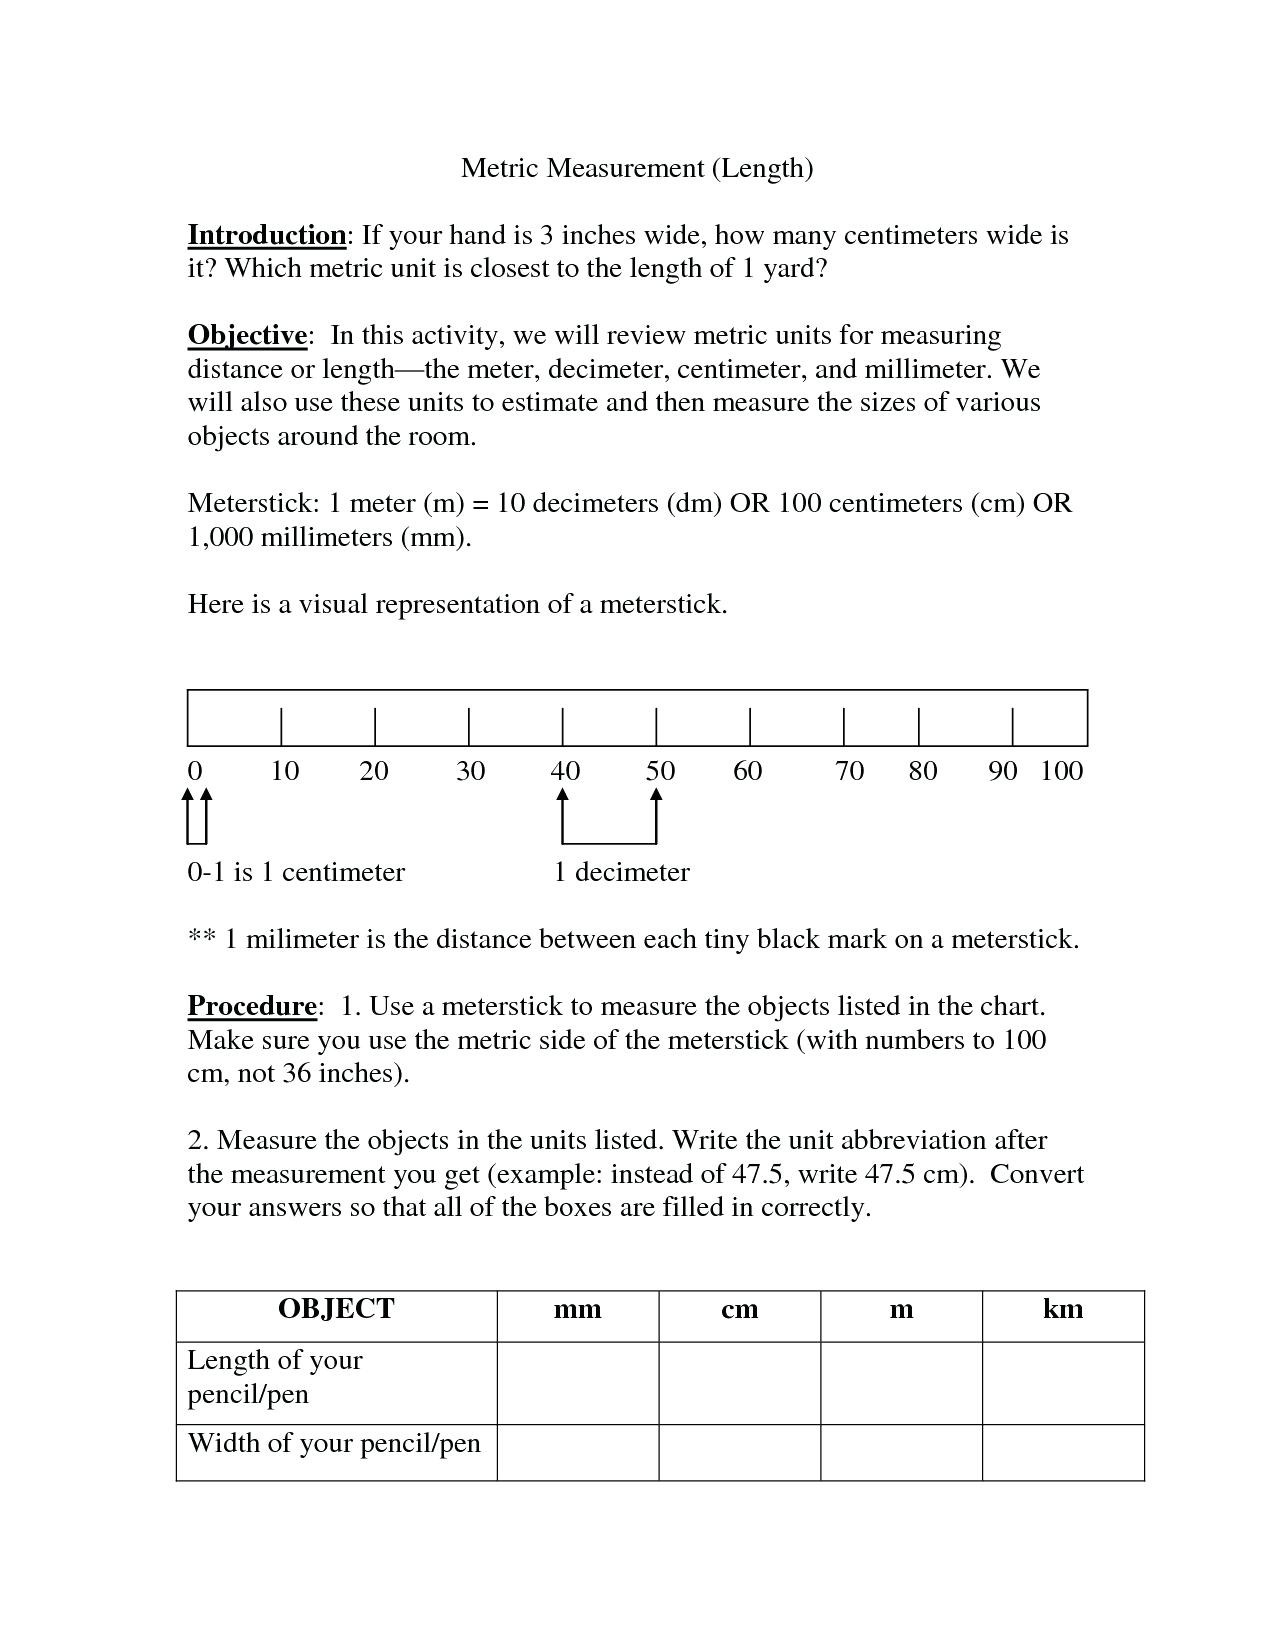 Measuring Units Worksheet Answer Key Converting Metric Units Worksheet with Answers